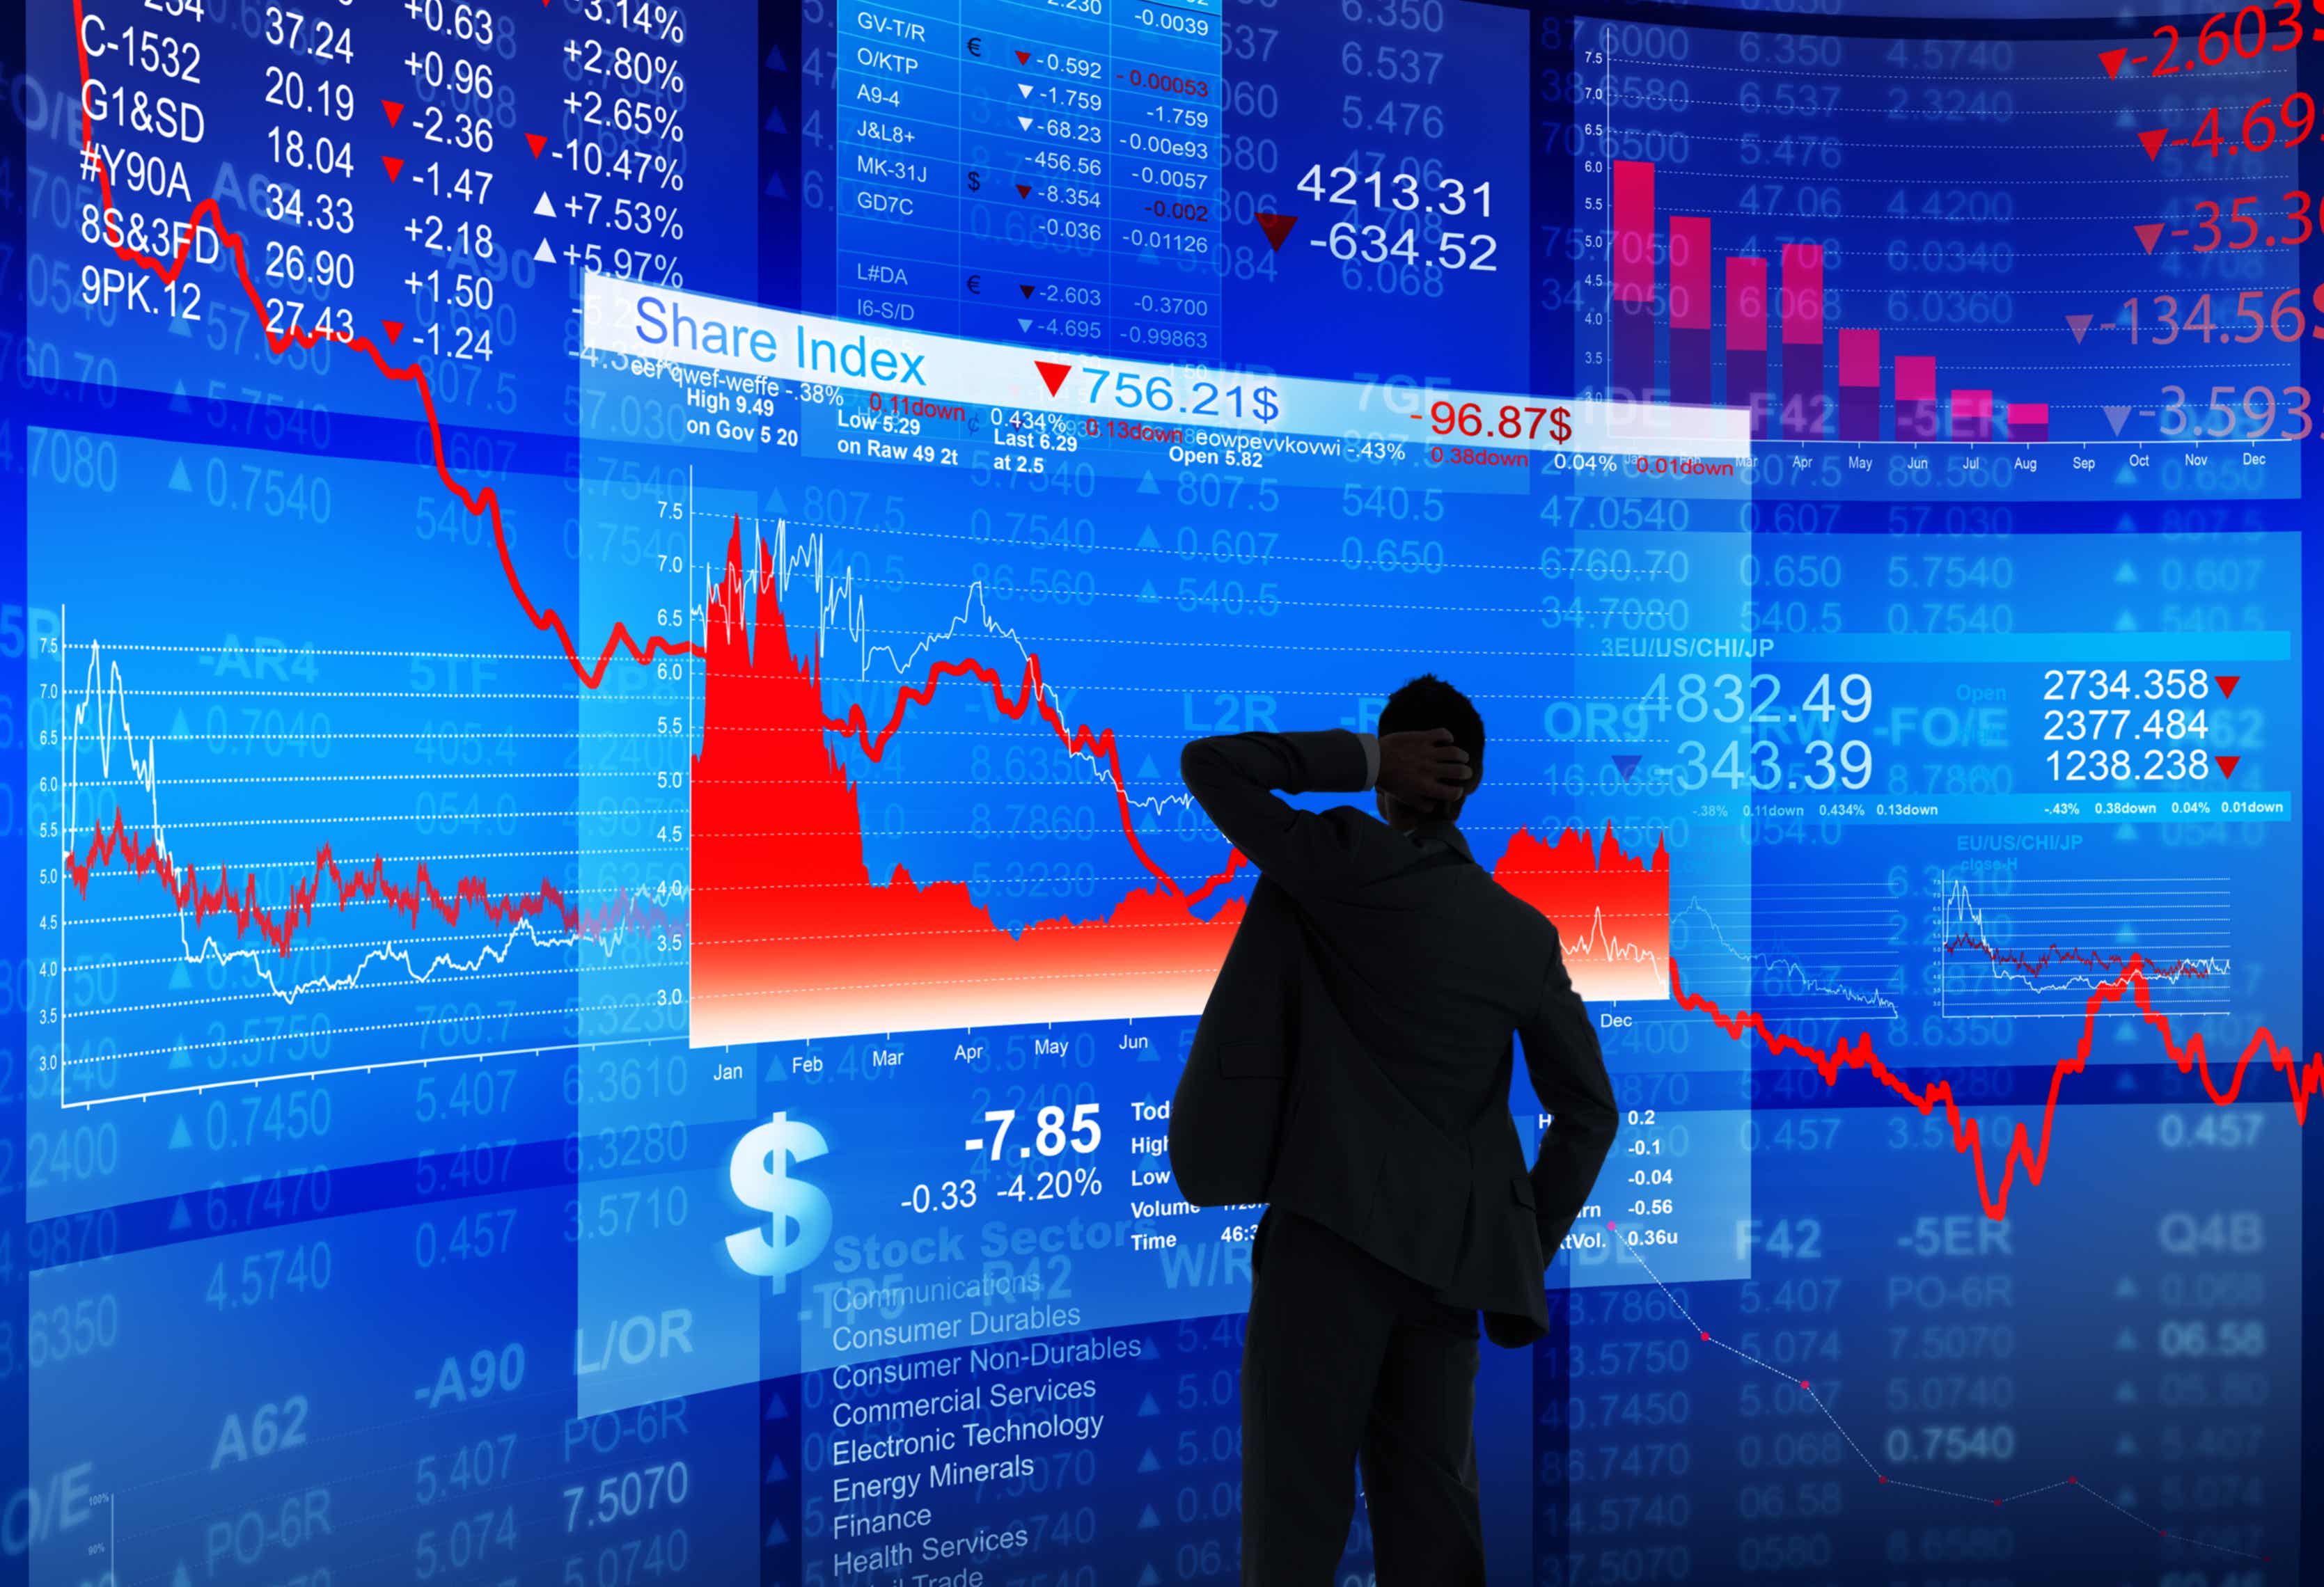 man monitoring stock market crash on a large screen